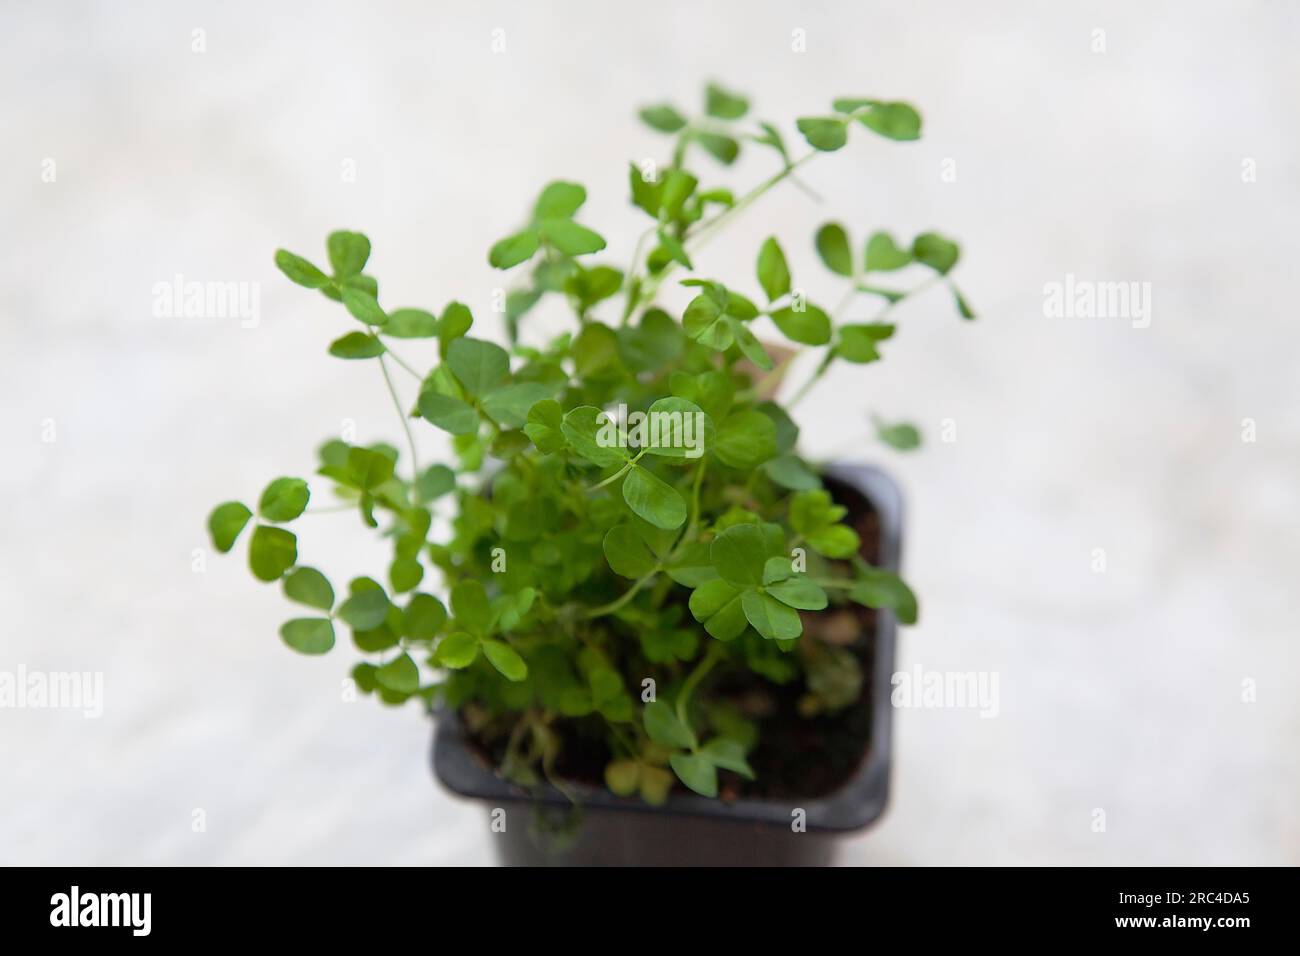 Plants, Flora, Trifolium dubium, Shamrock growing in small plastic container. Stock Photo